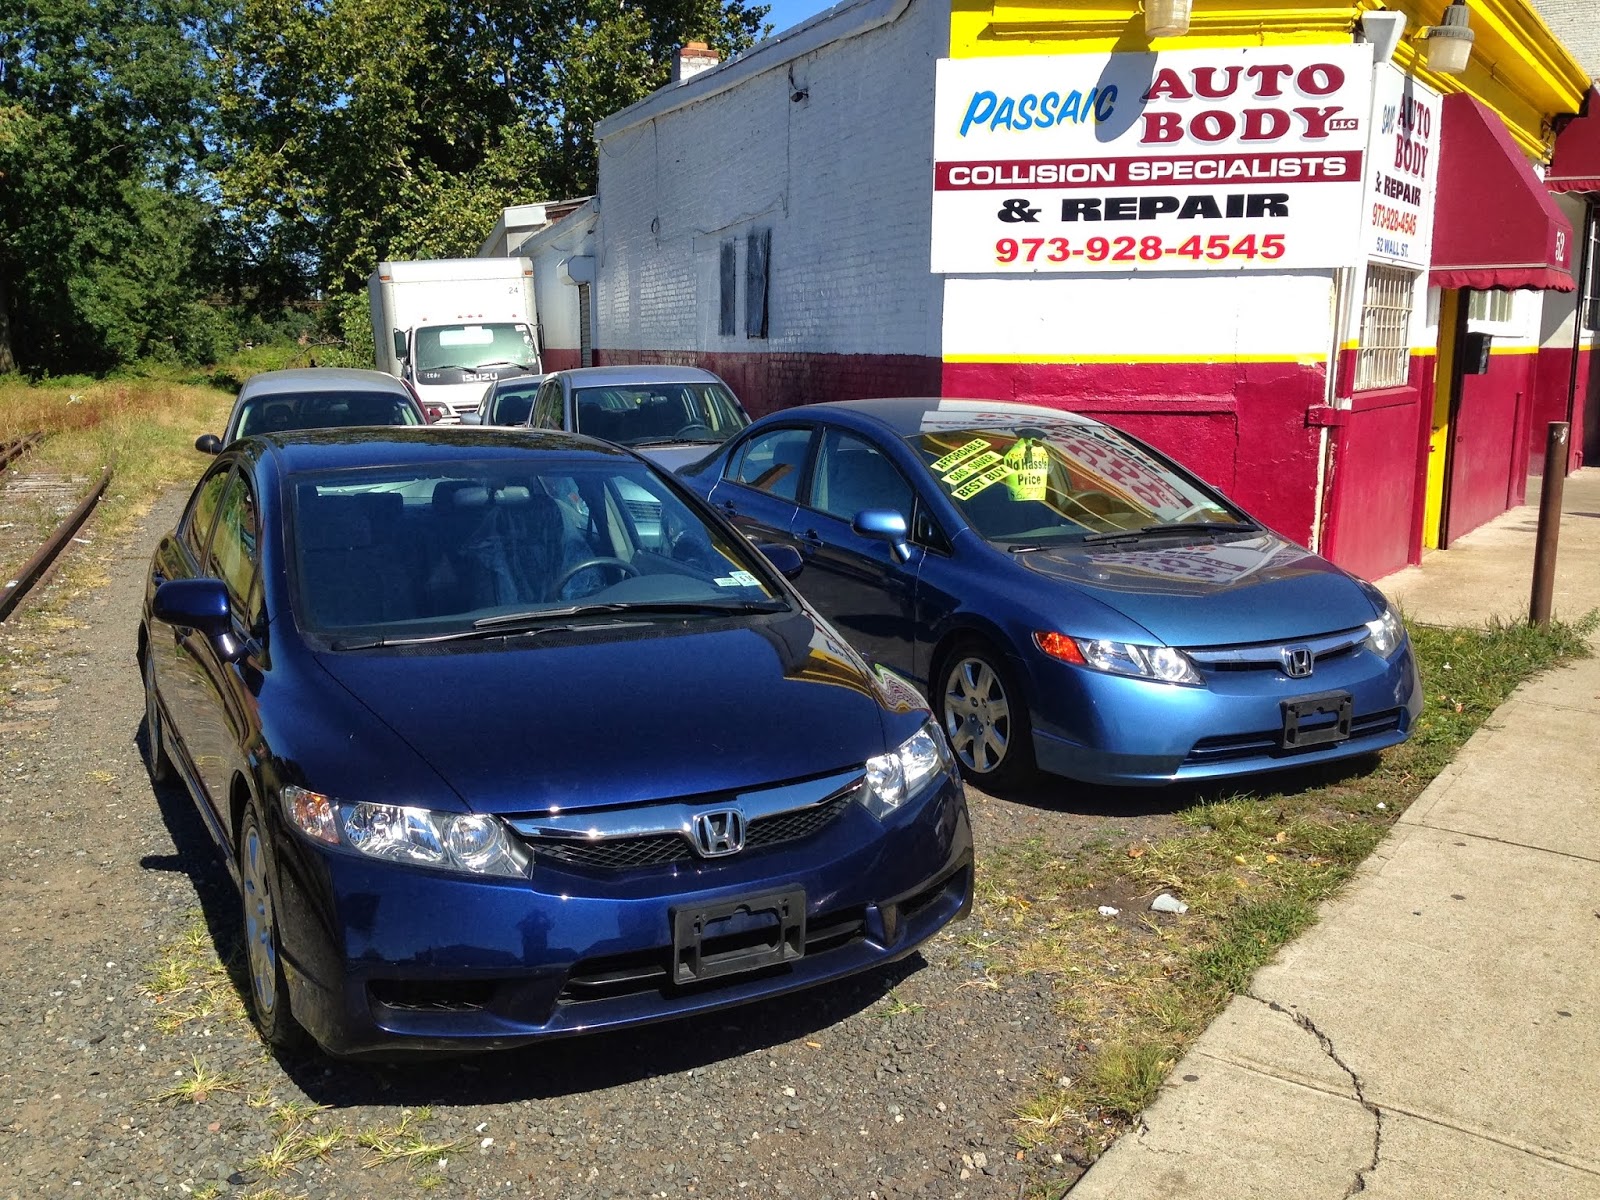 Photo of Passaic Auto Body & Repair LLC in Passaic City, New Jersey, United States - 8 Picture of Point of interest, Establishment, Car dealer, Store, Car repair